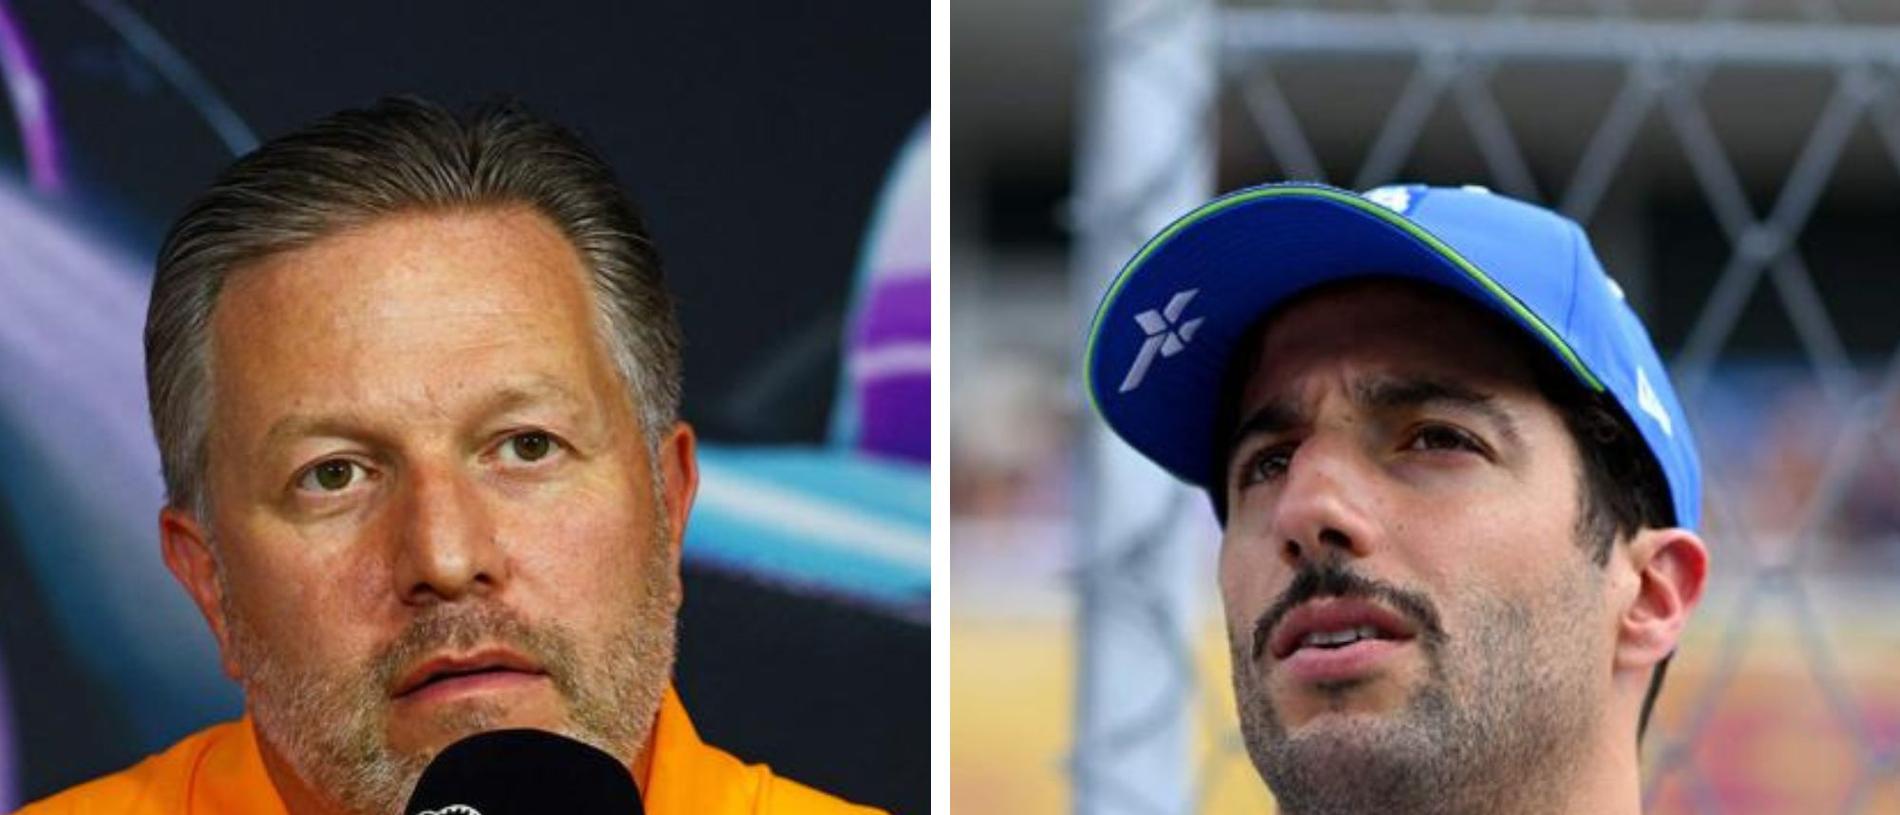 Zak Brown and Daniel Ricciardo. Photo: Getty Images